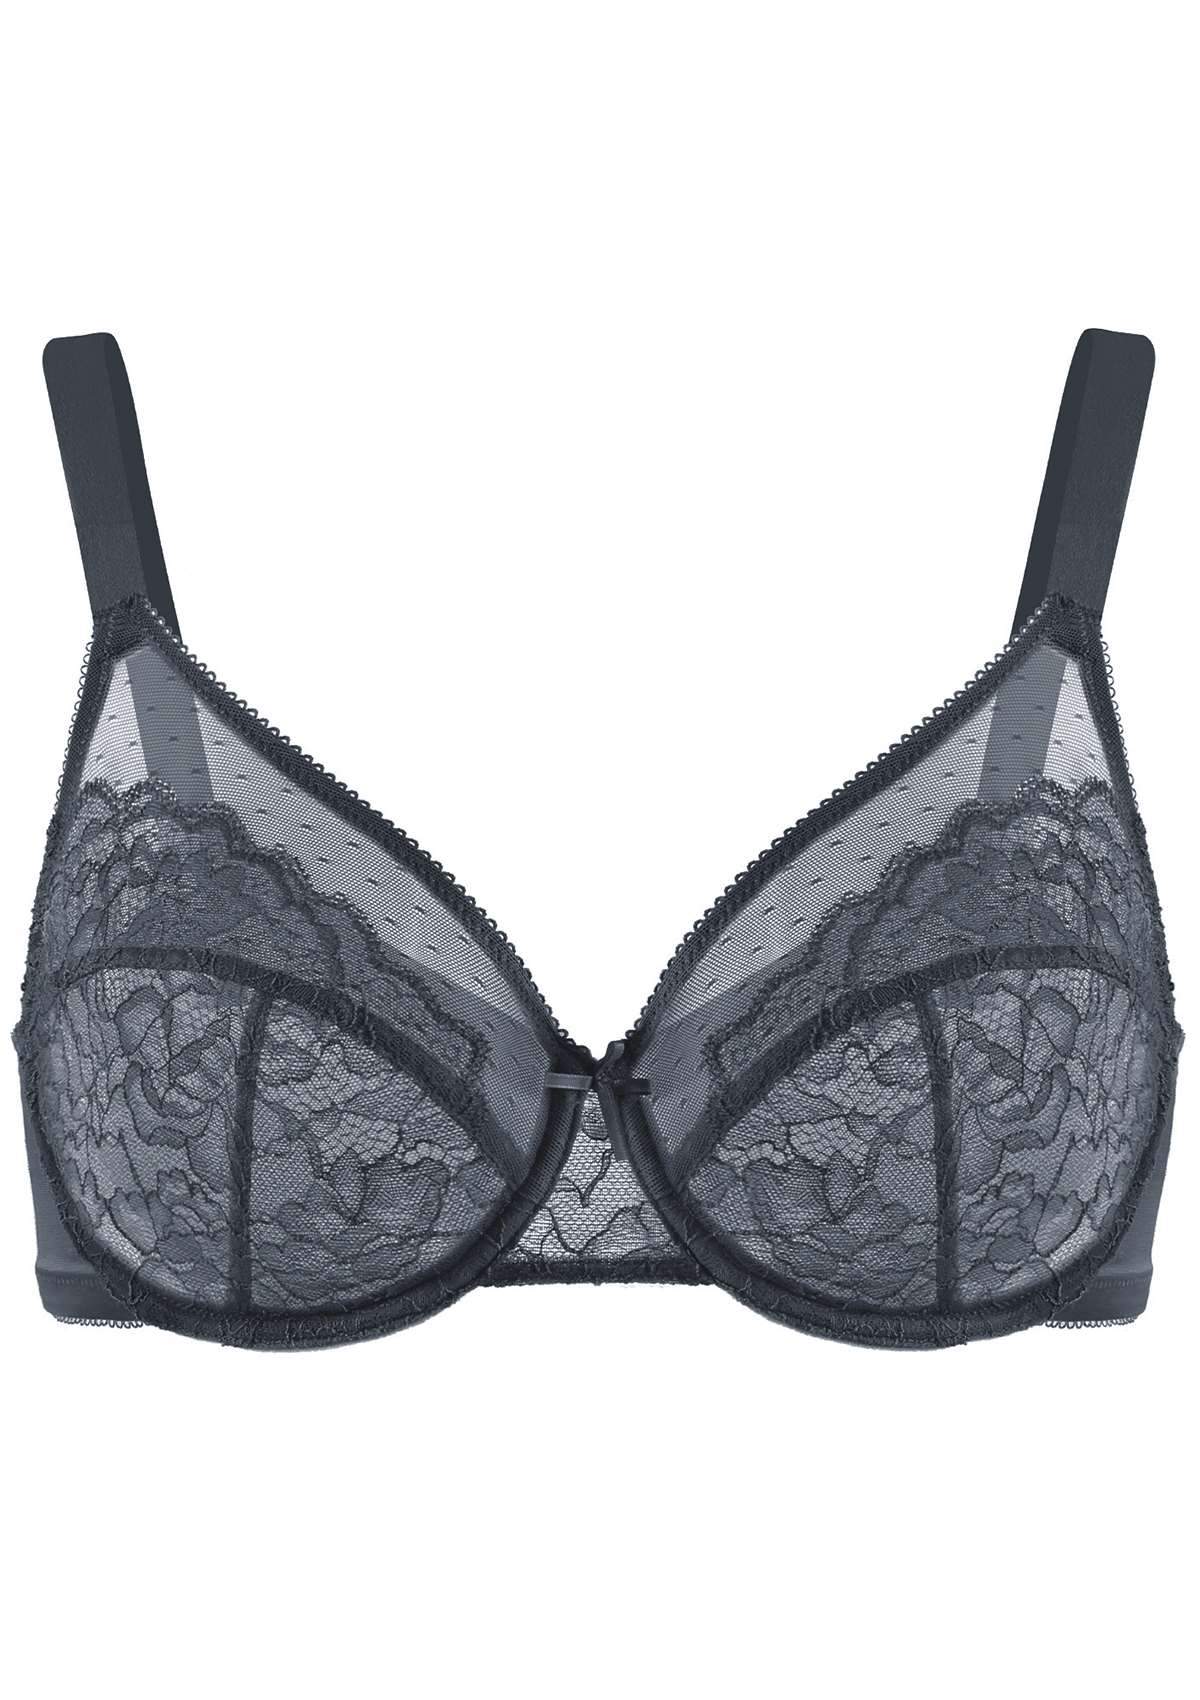 HSIA Enchante Matching Bra And Underwear Sets: Uplift Big Boobs Bra - Dark Gray / 40 / DDD/F